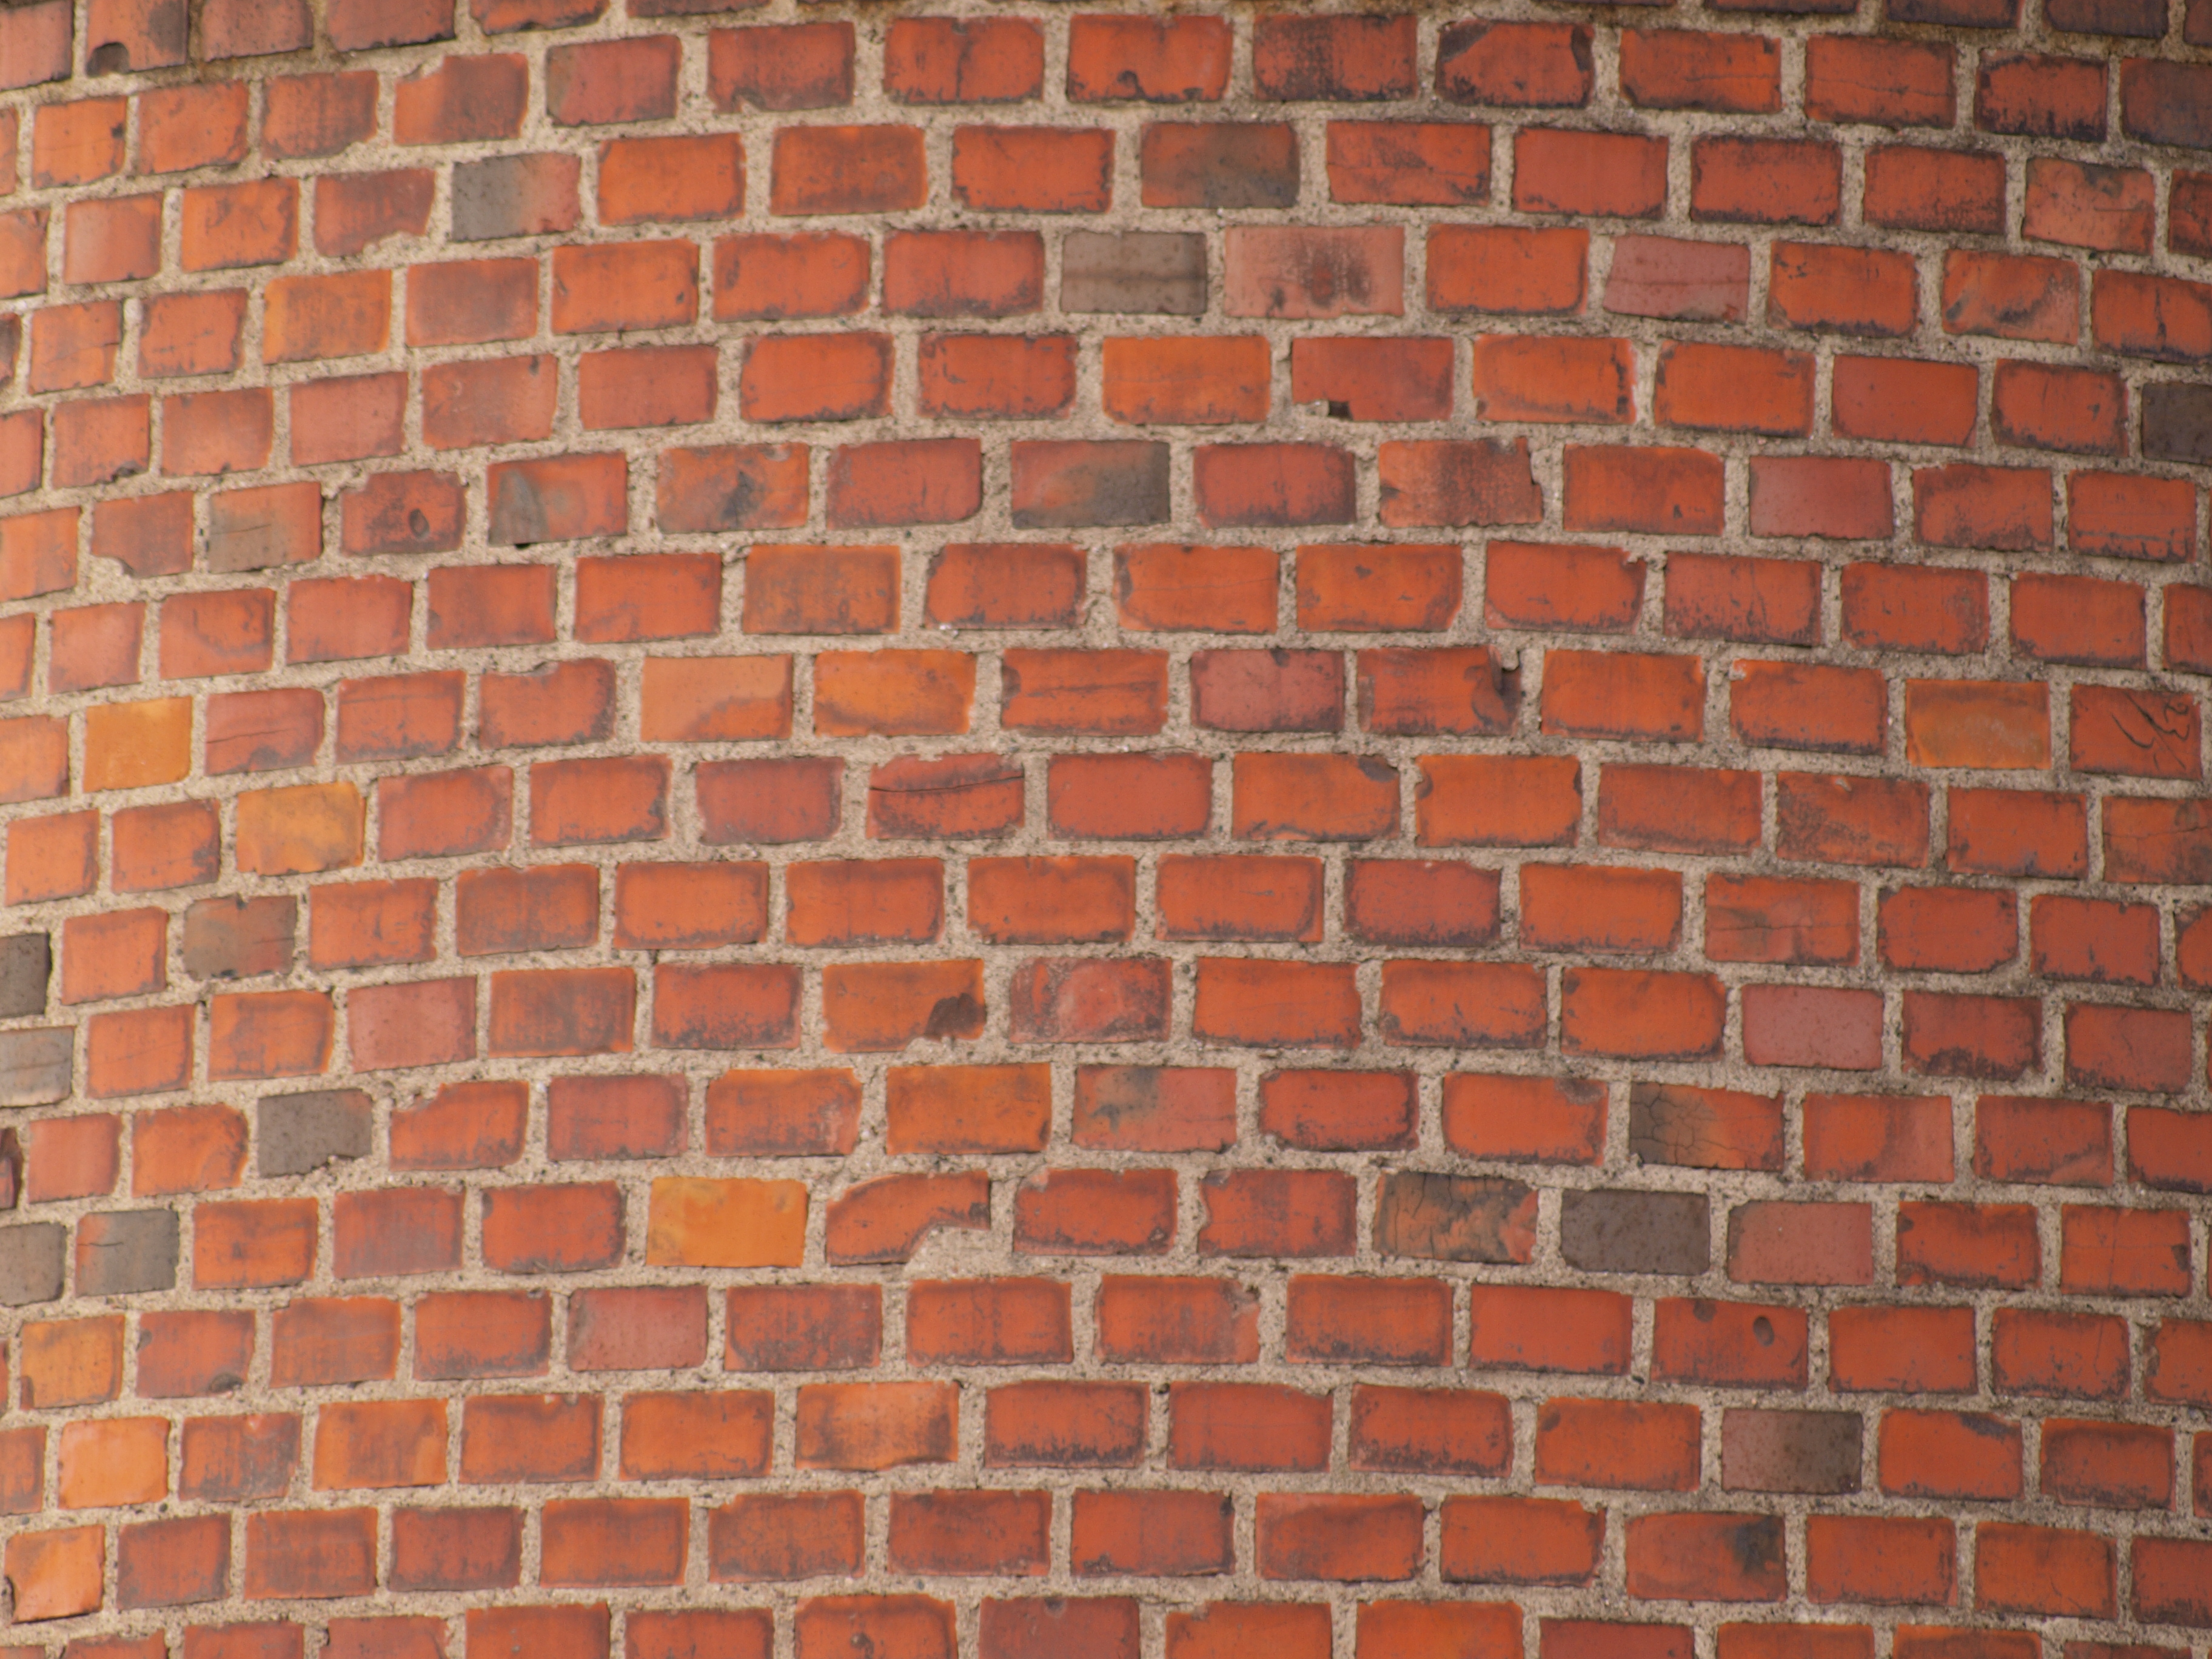 Tiled Brick Texture, Brick, Old, Orange, Red, HQ Photo